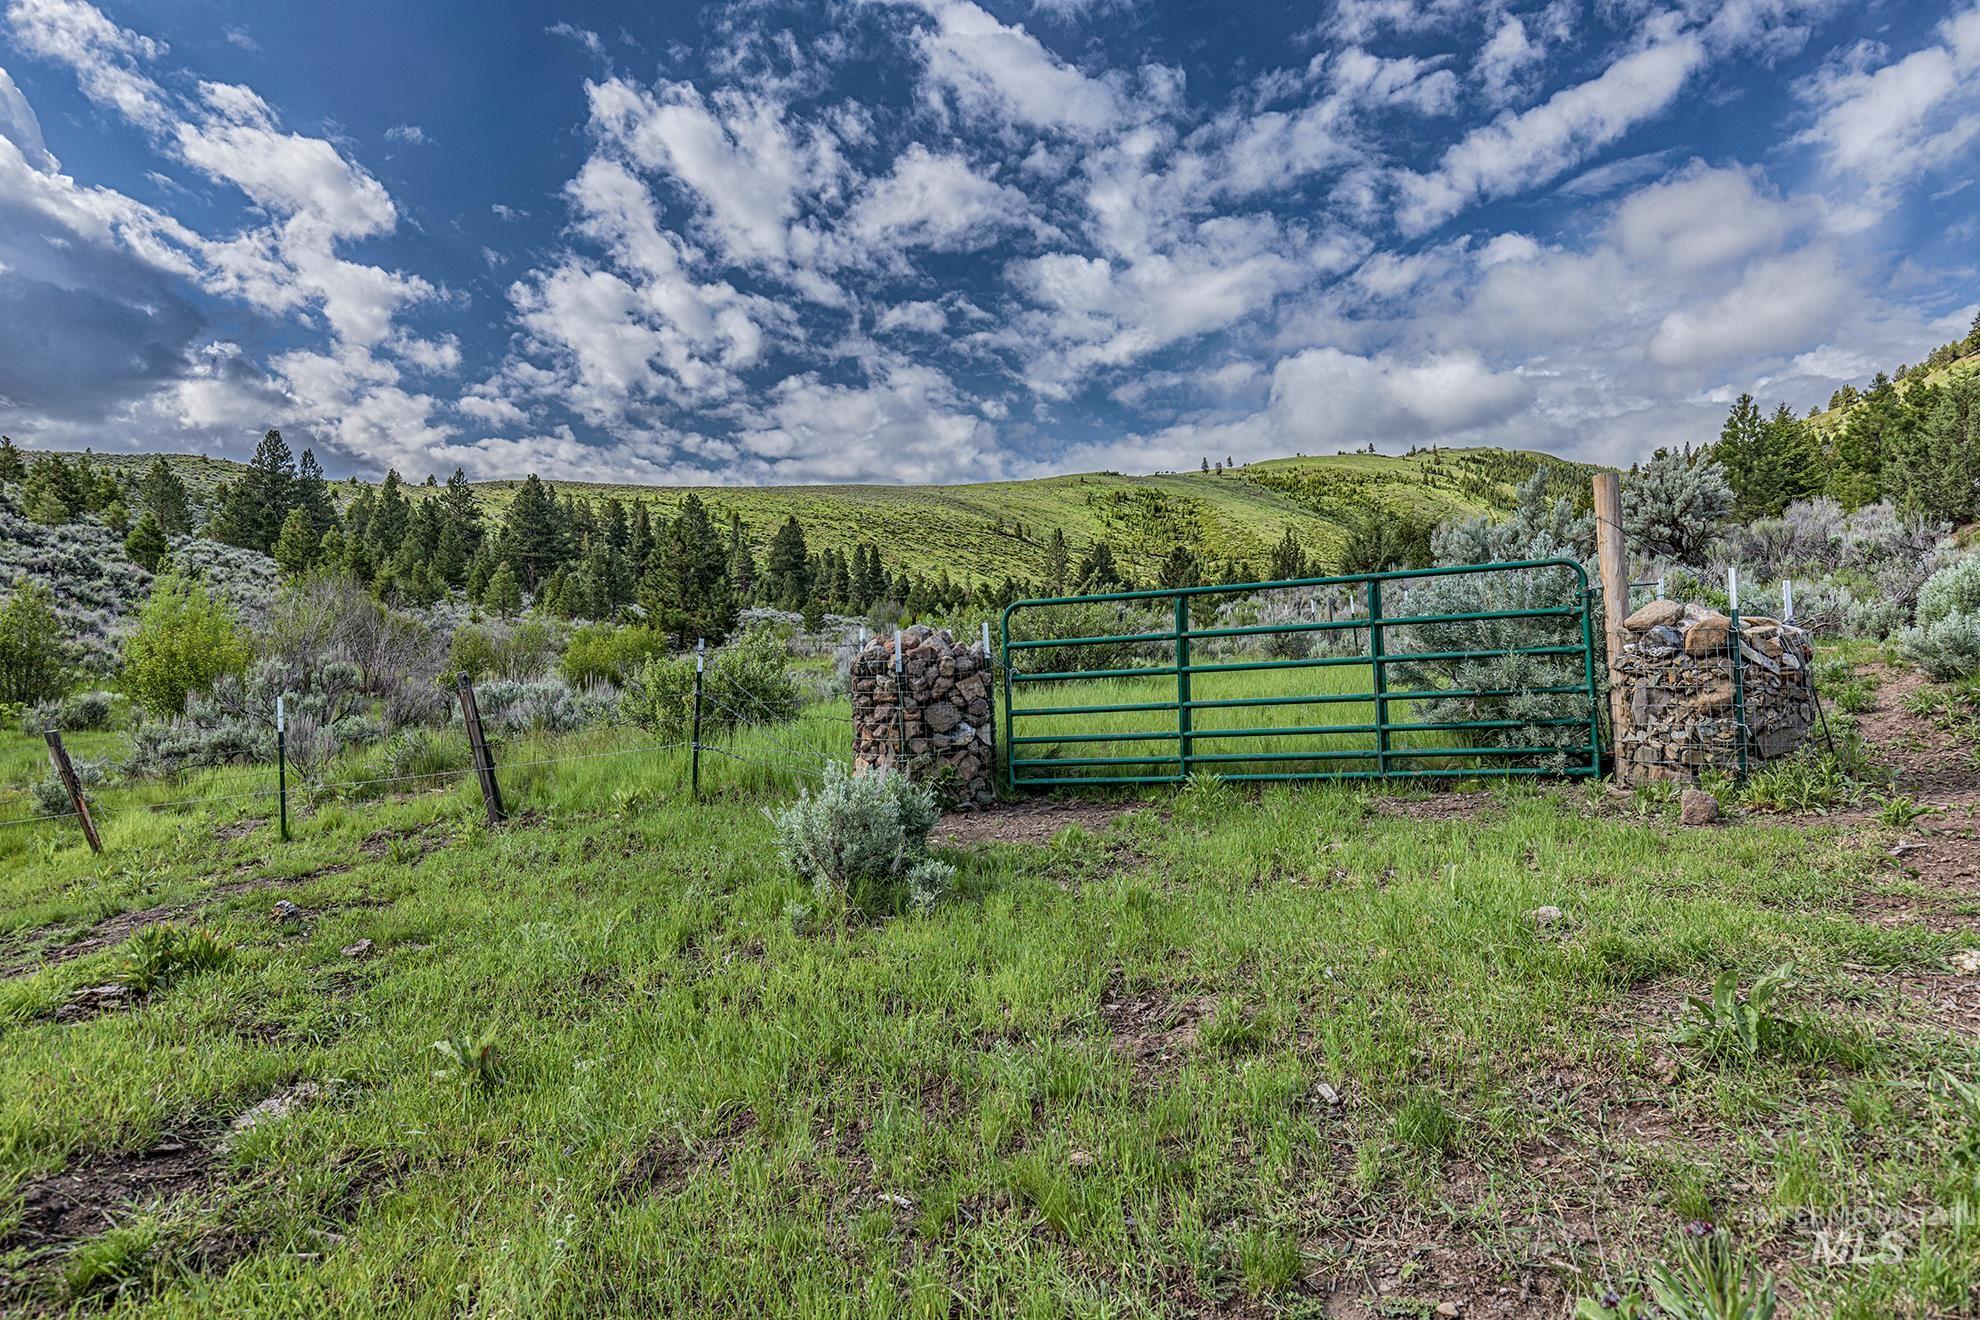 1680 FS Road, Unity, Oregon 97884, Farm & Ranch For Sale, Price $873,600,MLS 98847772